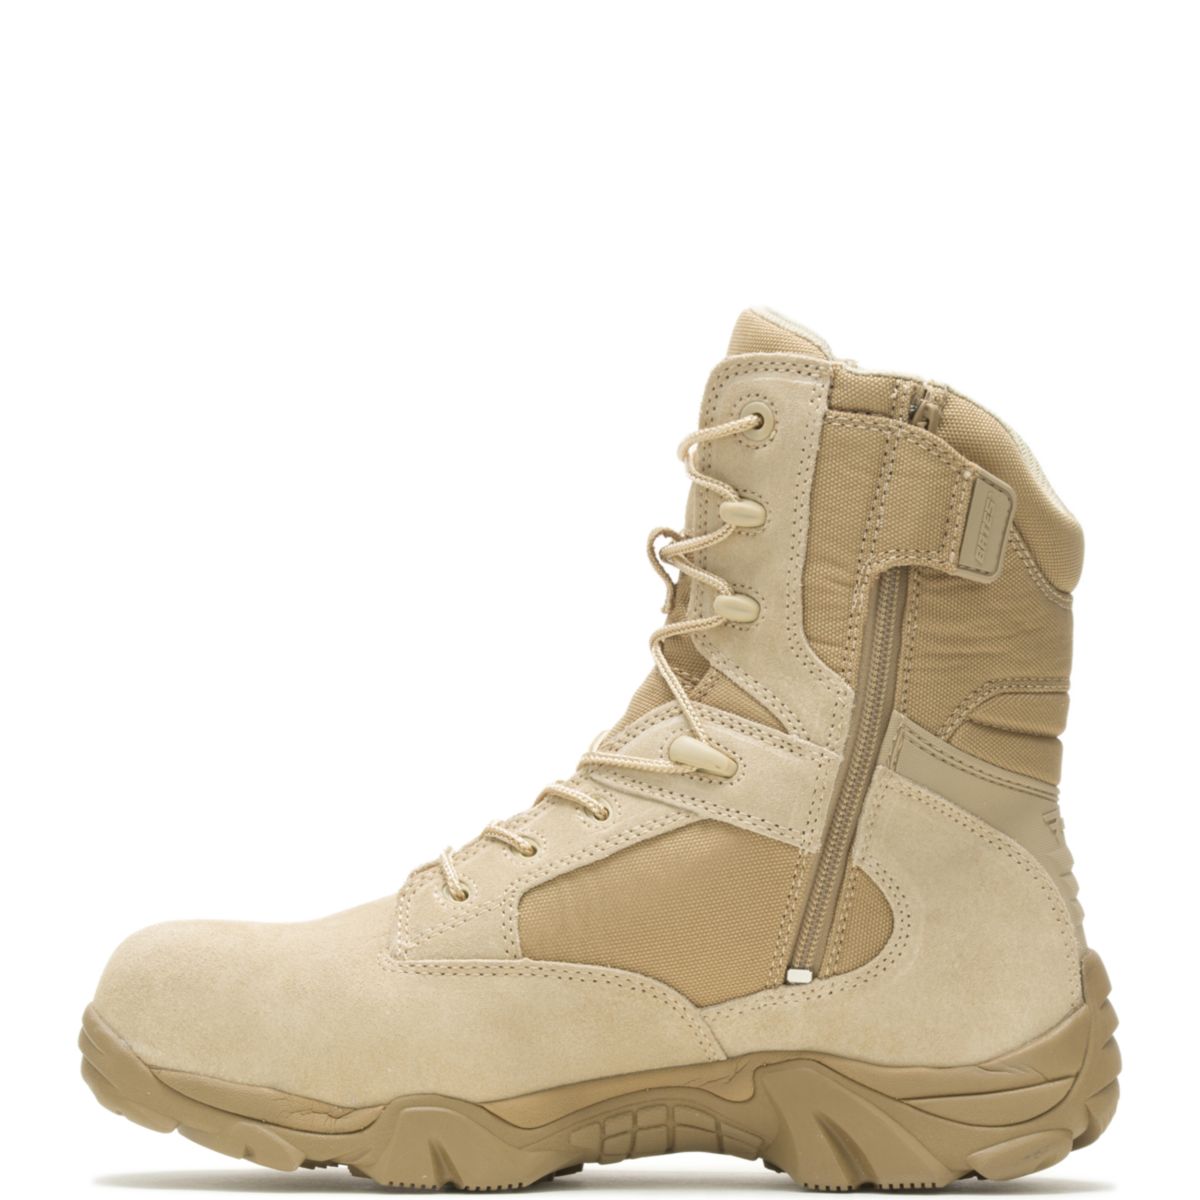 Bates Men's GX-8 Composite Toe Side-Zip Work Boot Desert Tan - E02276 - image 3 of 6